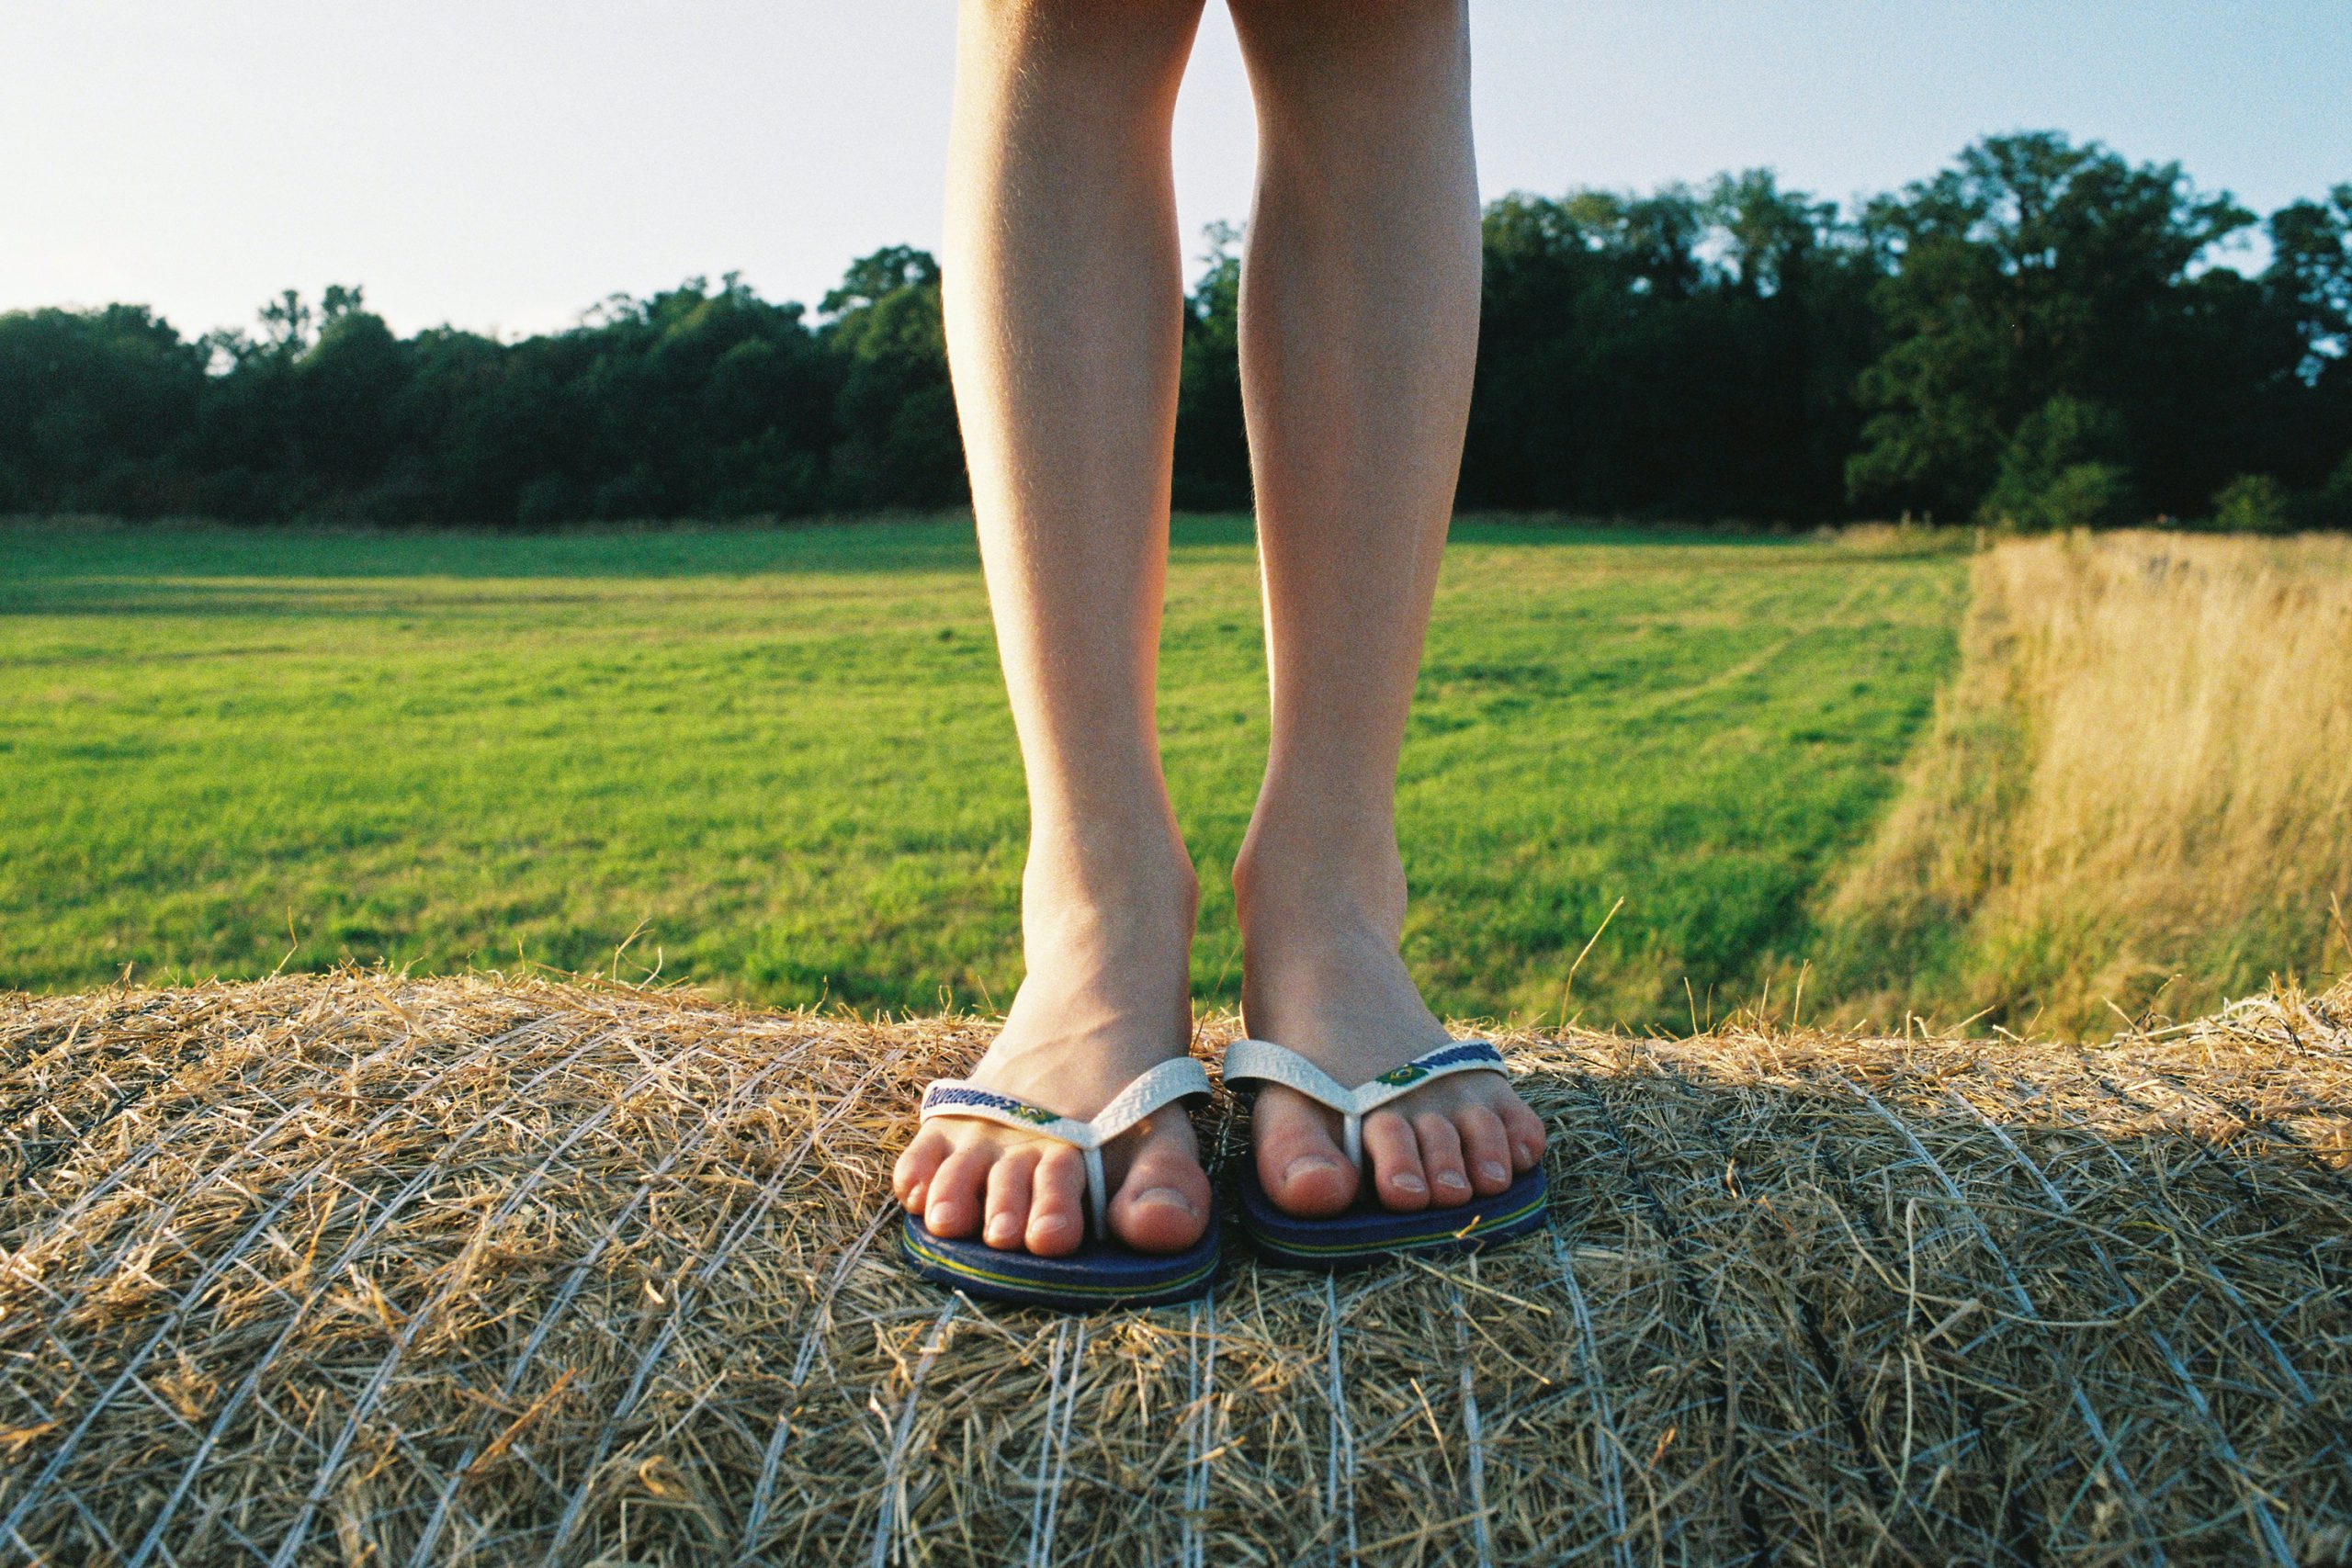 person wearing black flip flops standing on brown grass field during daytime